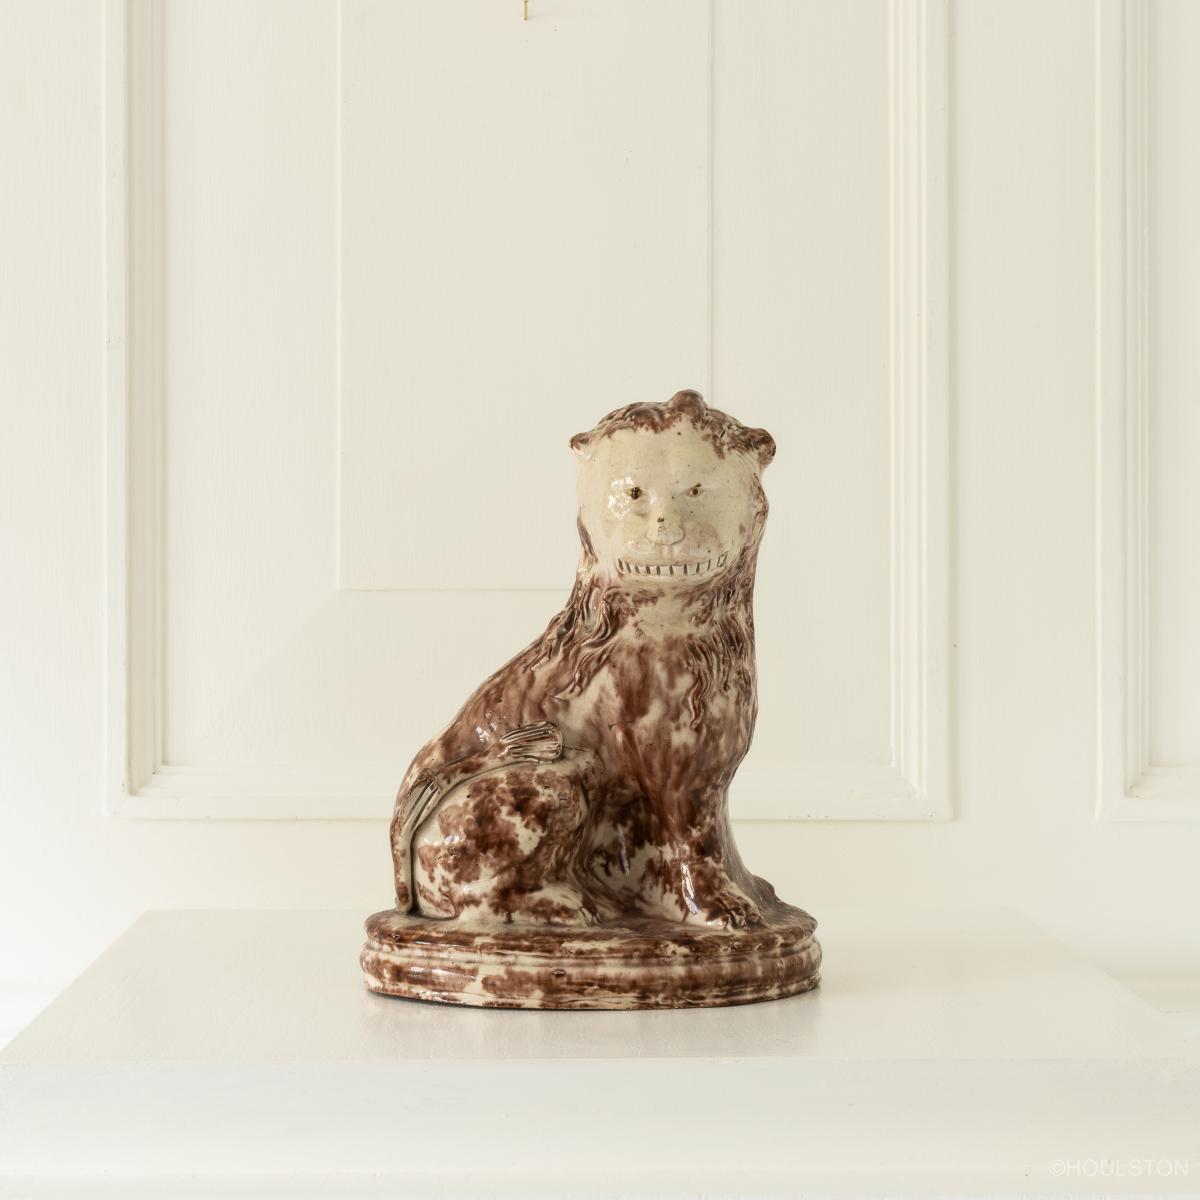 An 18th century creamware figure of a lion